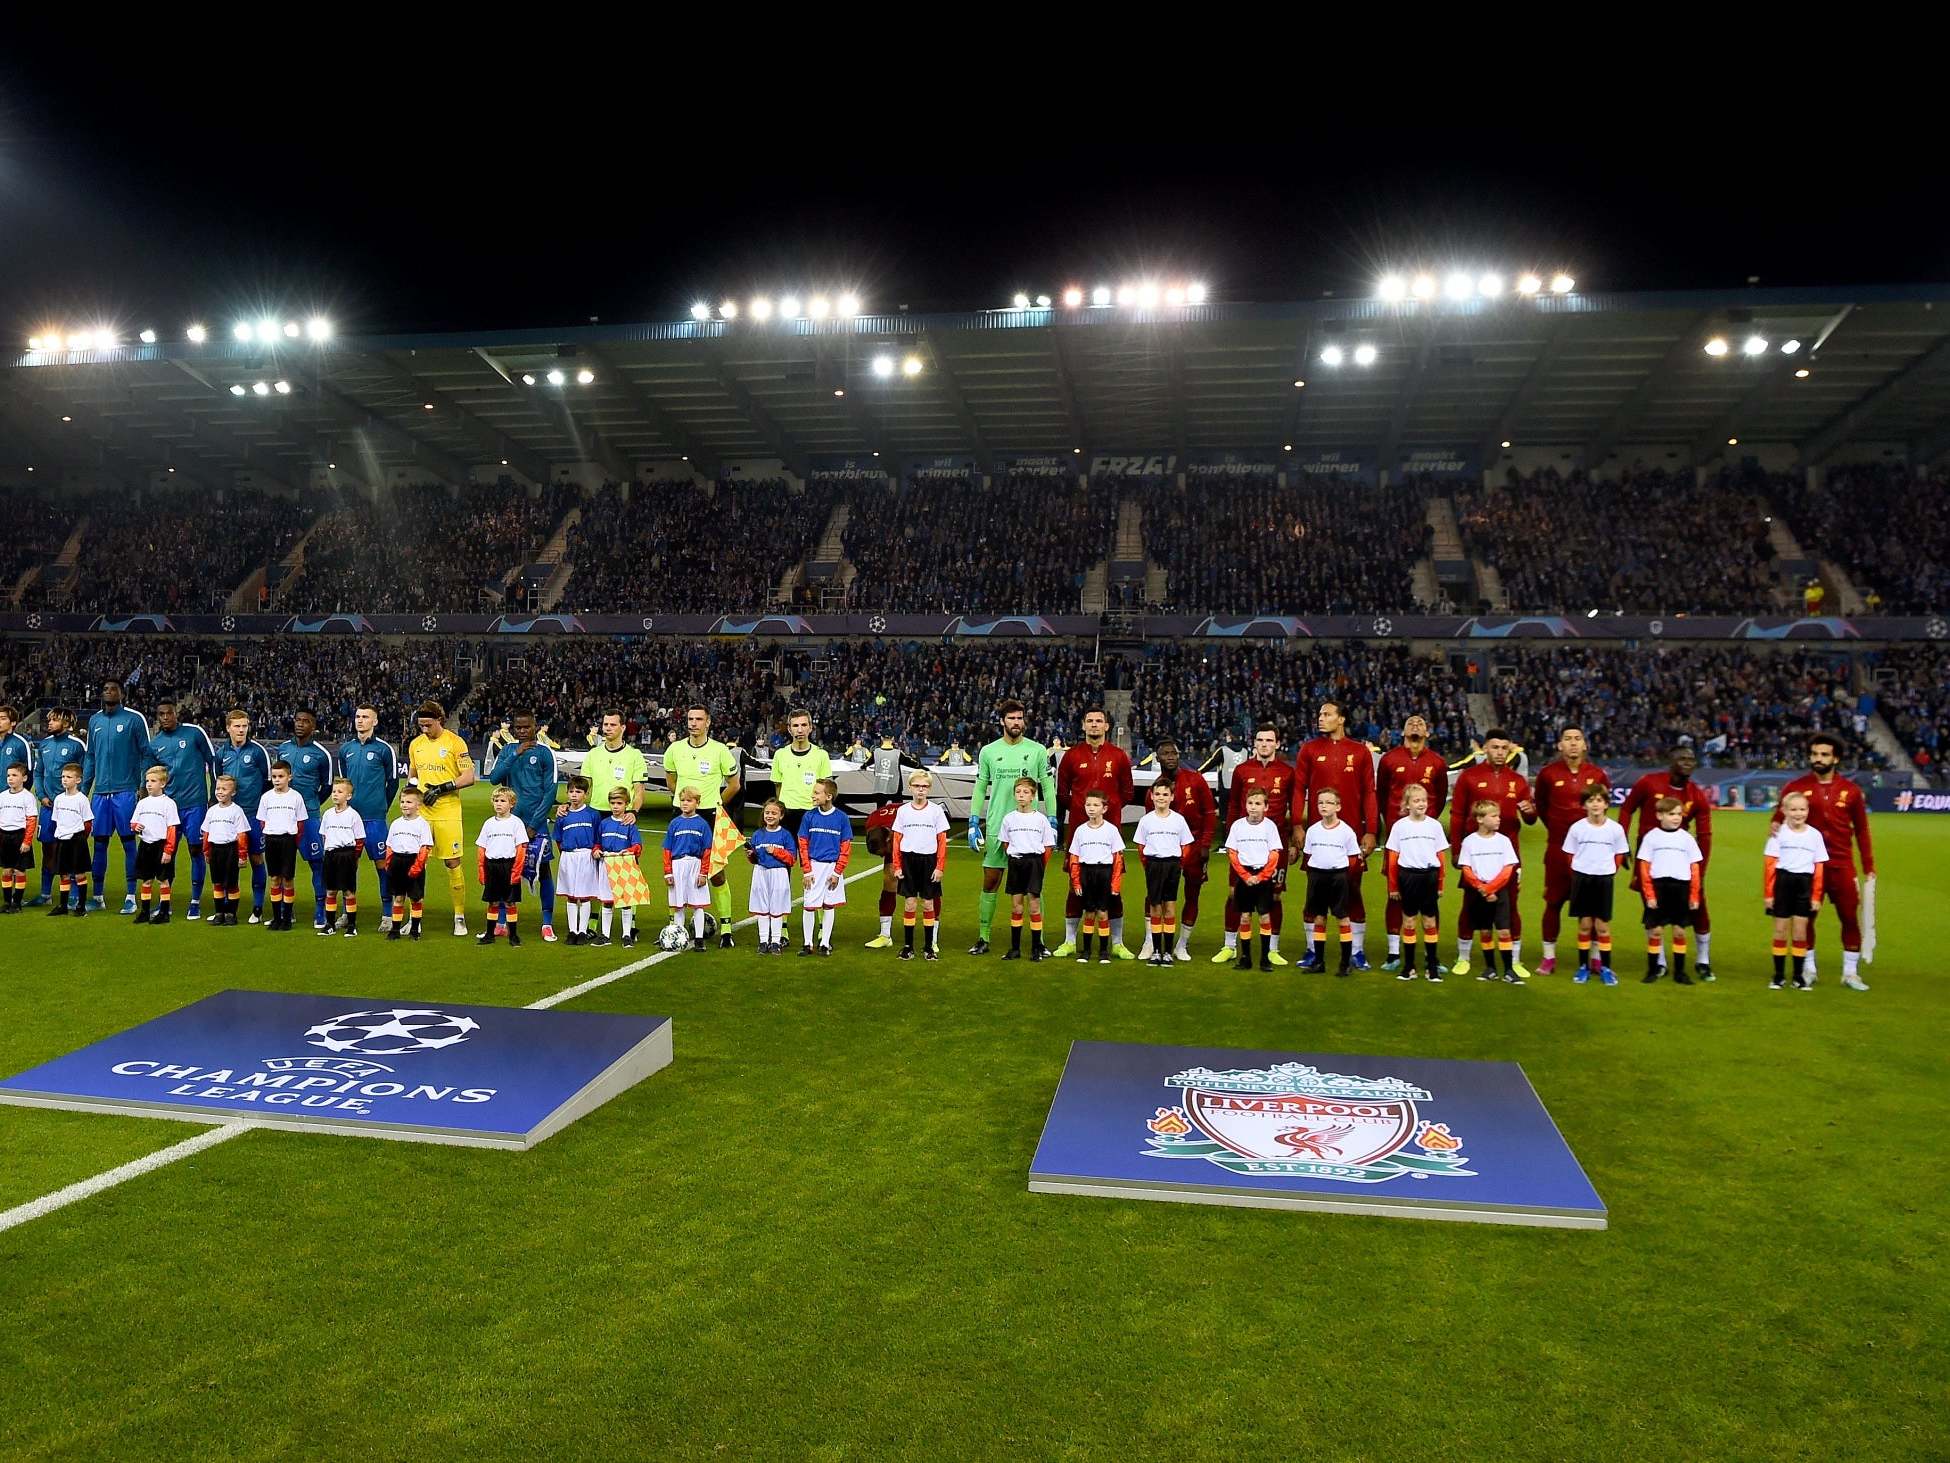 Liverpool and Genk line up before kick-off in Belgium